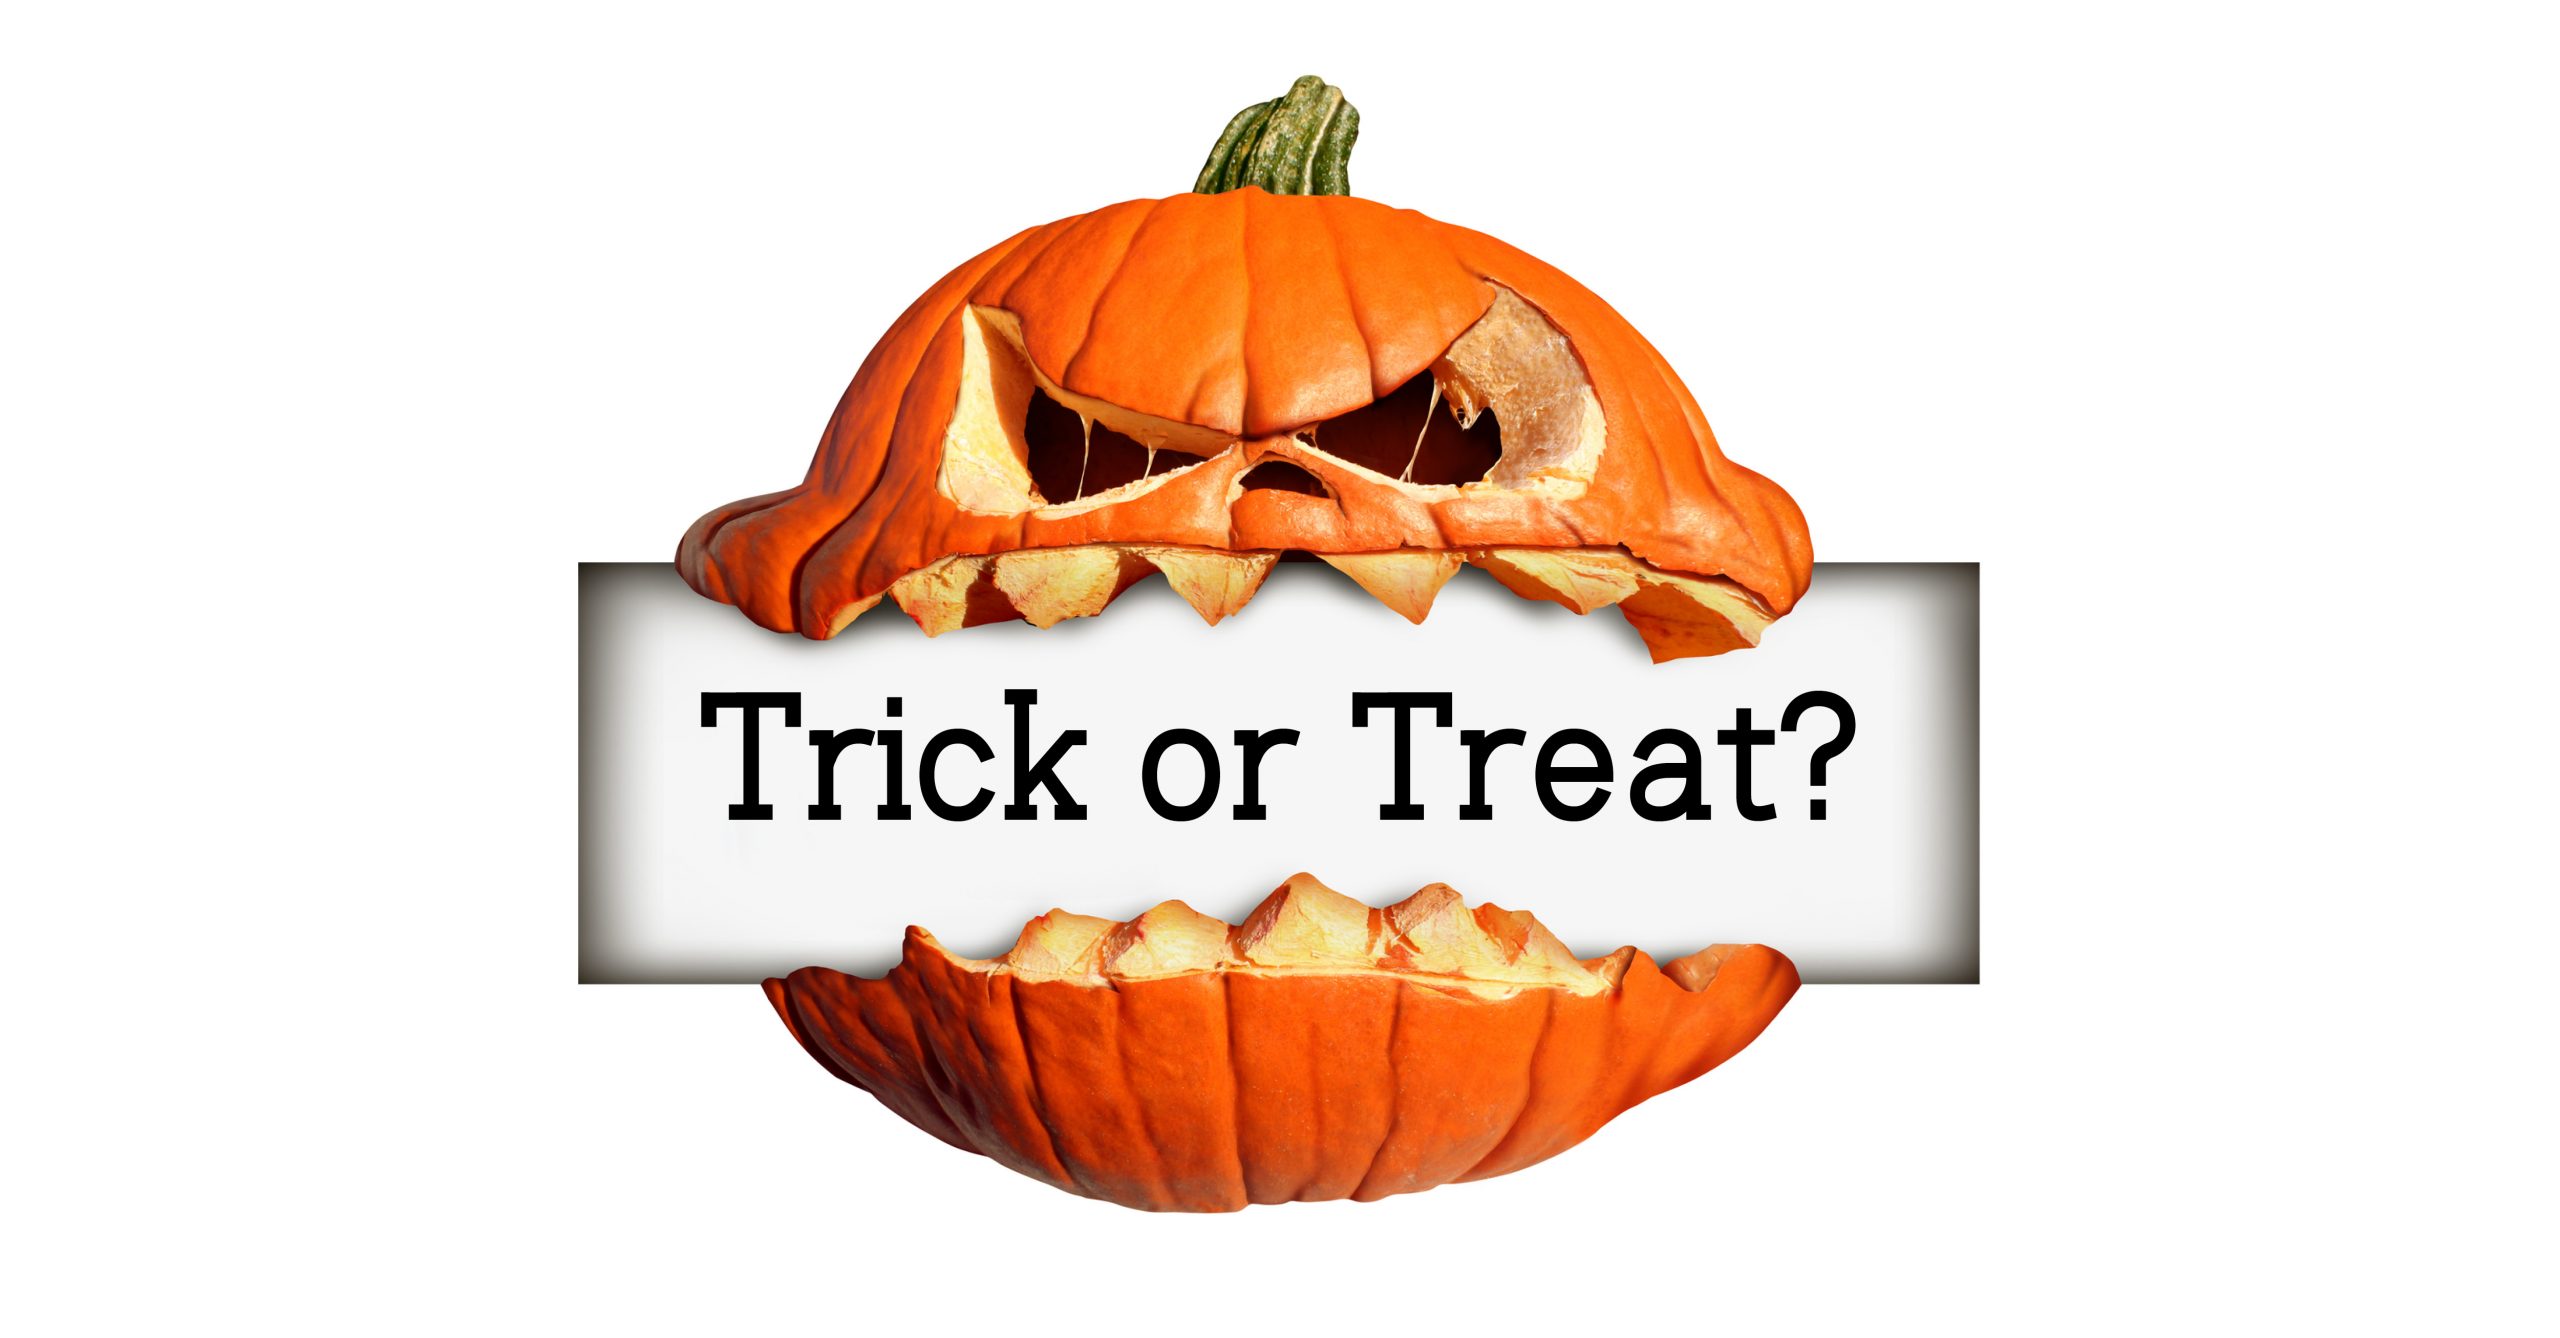 3 More Sweet Halloween-Themed Marketing Ideas